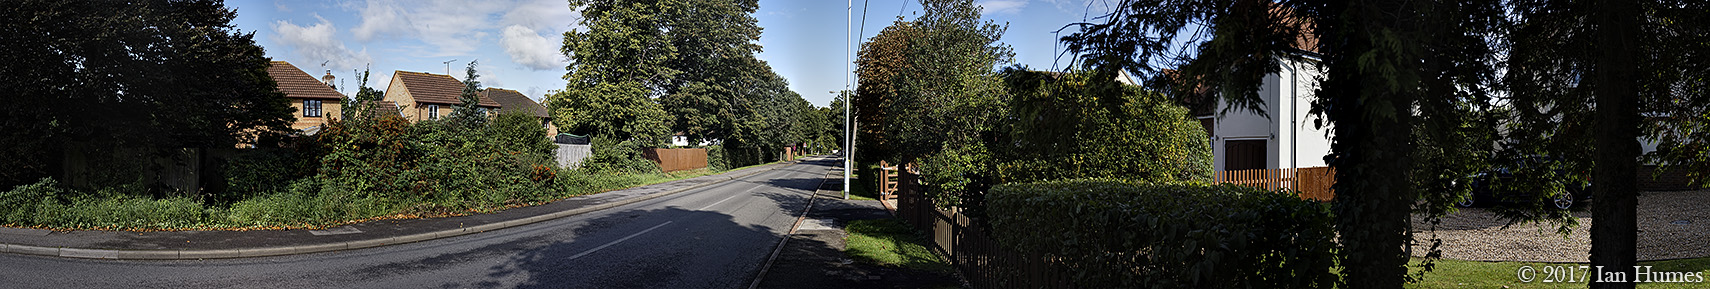 Village Hall - Winkfield Row